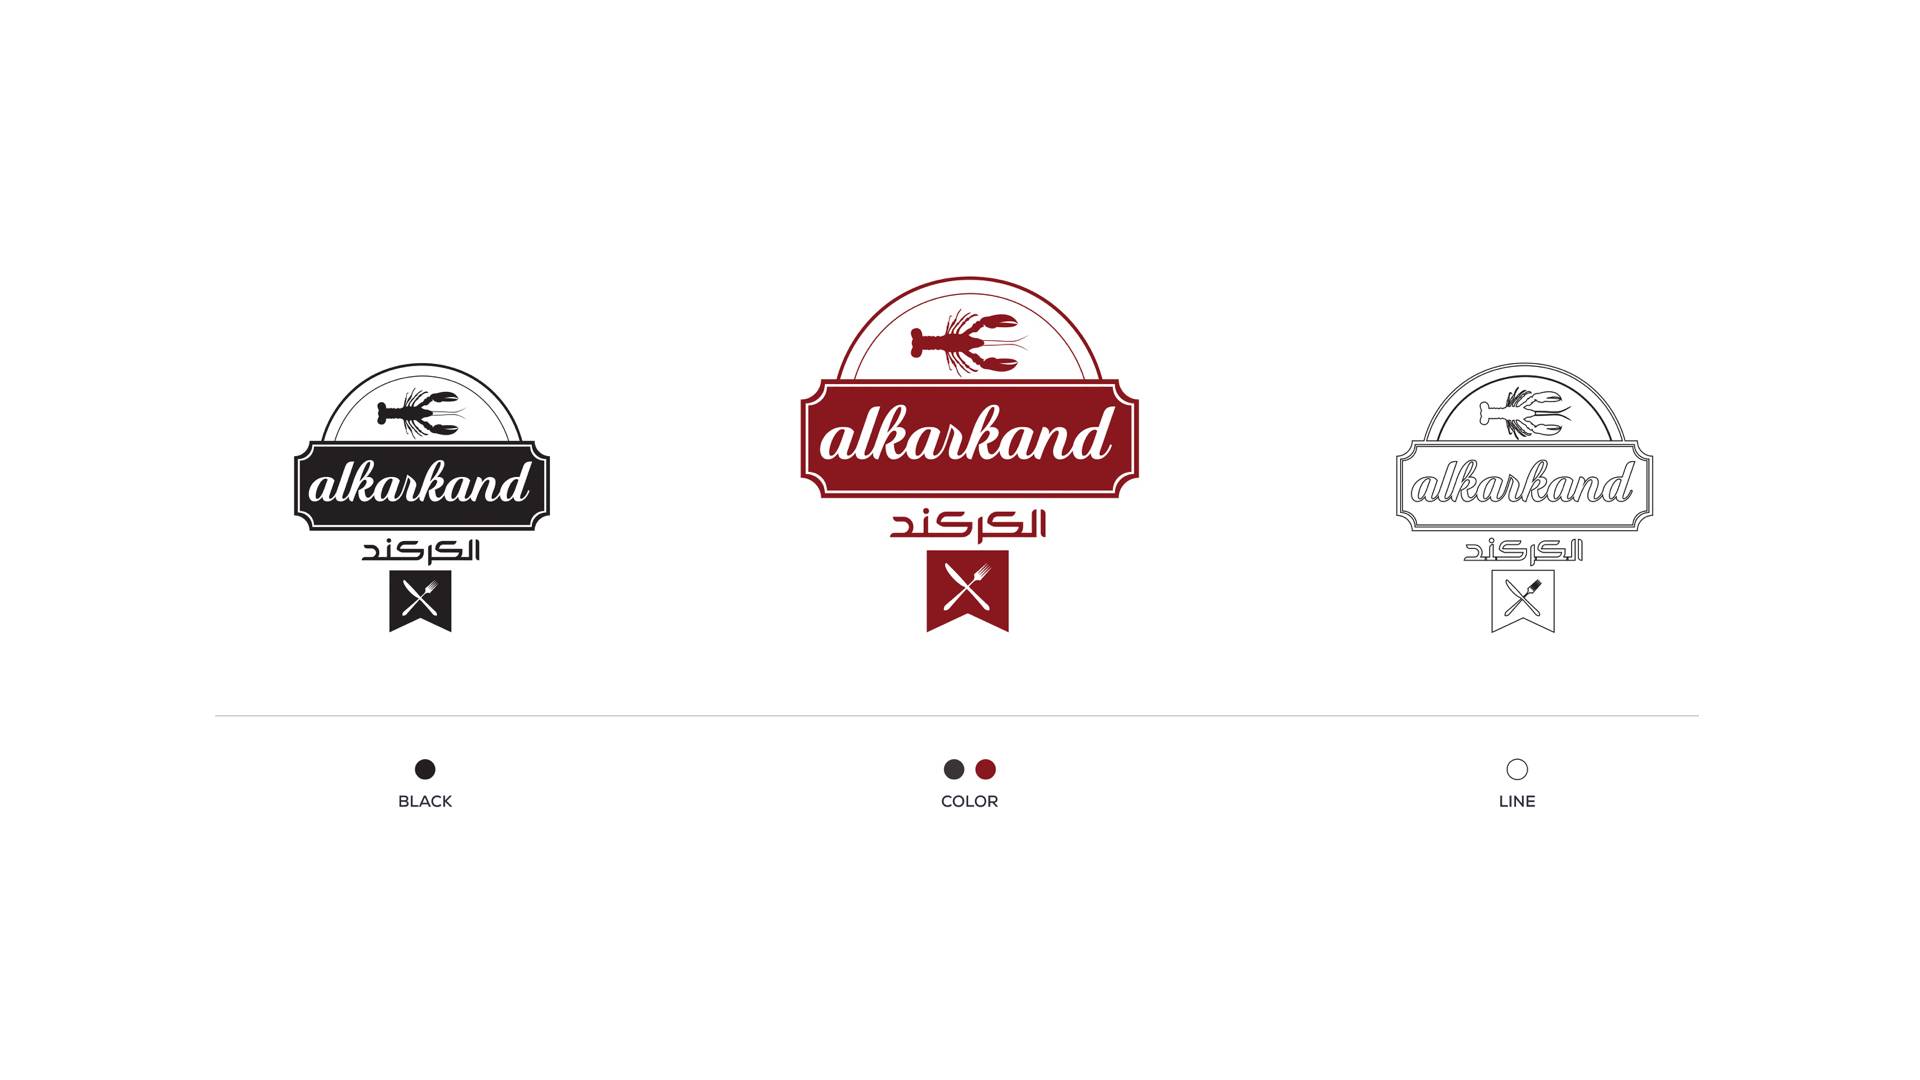 alkarkand restaurant logo konsepti